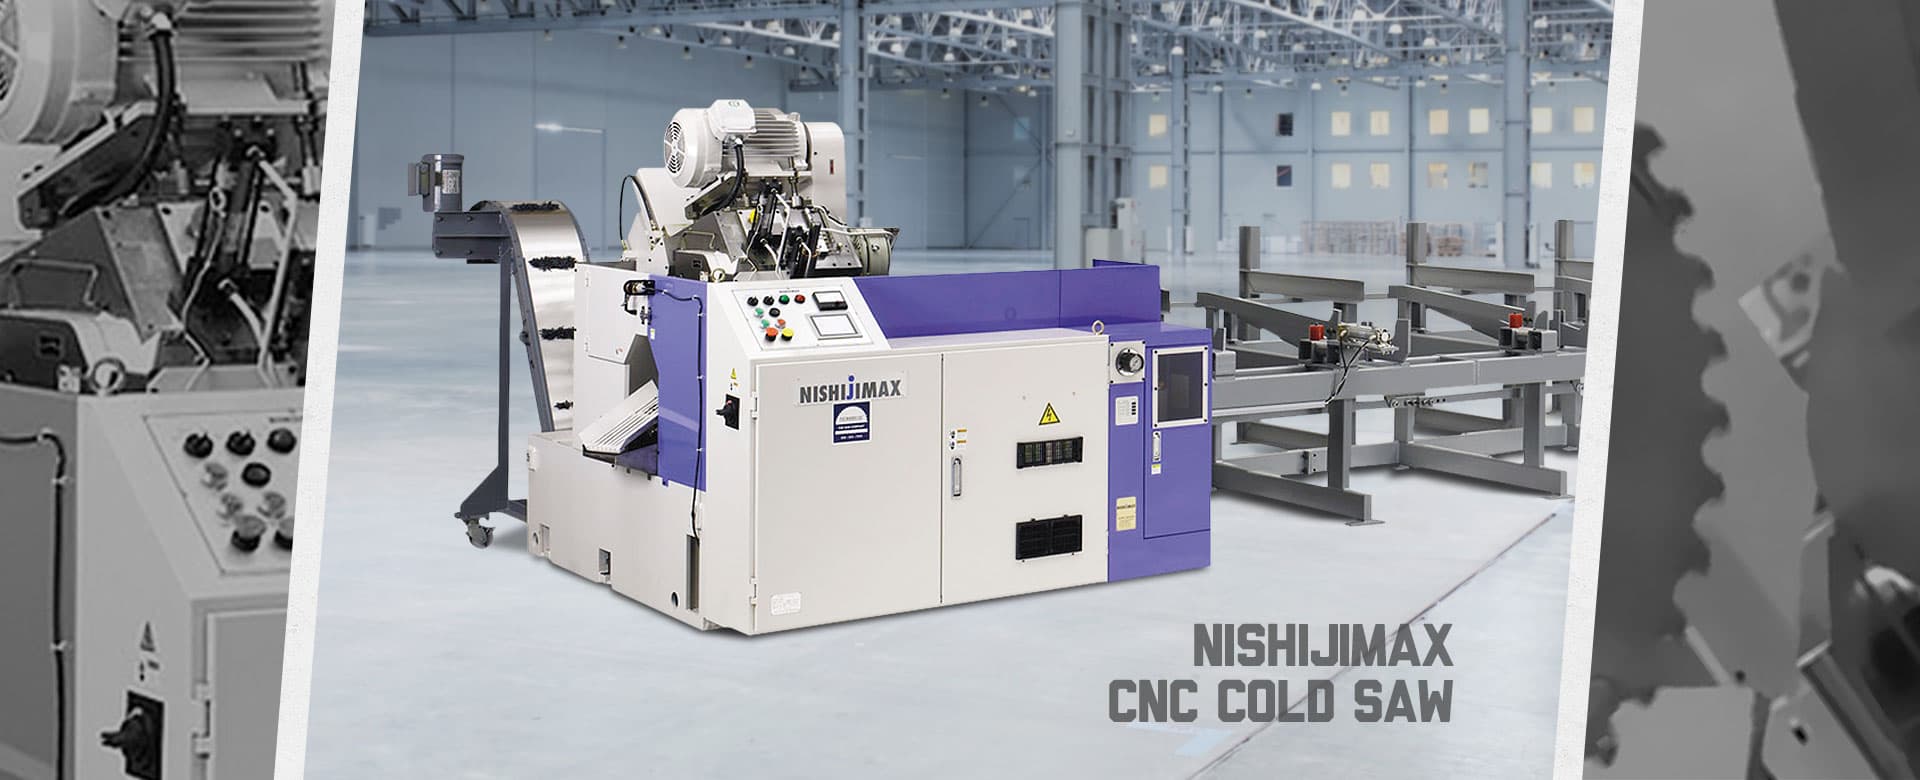 GSS Machinery offers Nishijimax CNC Cold Saws